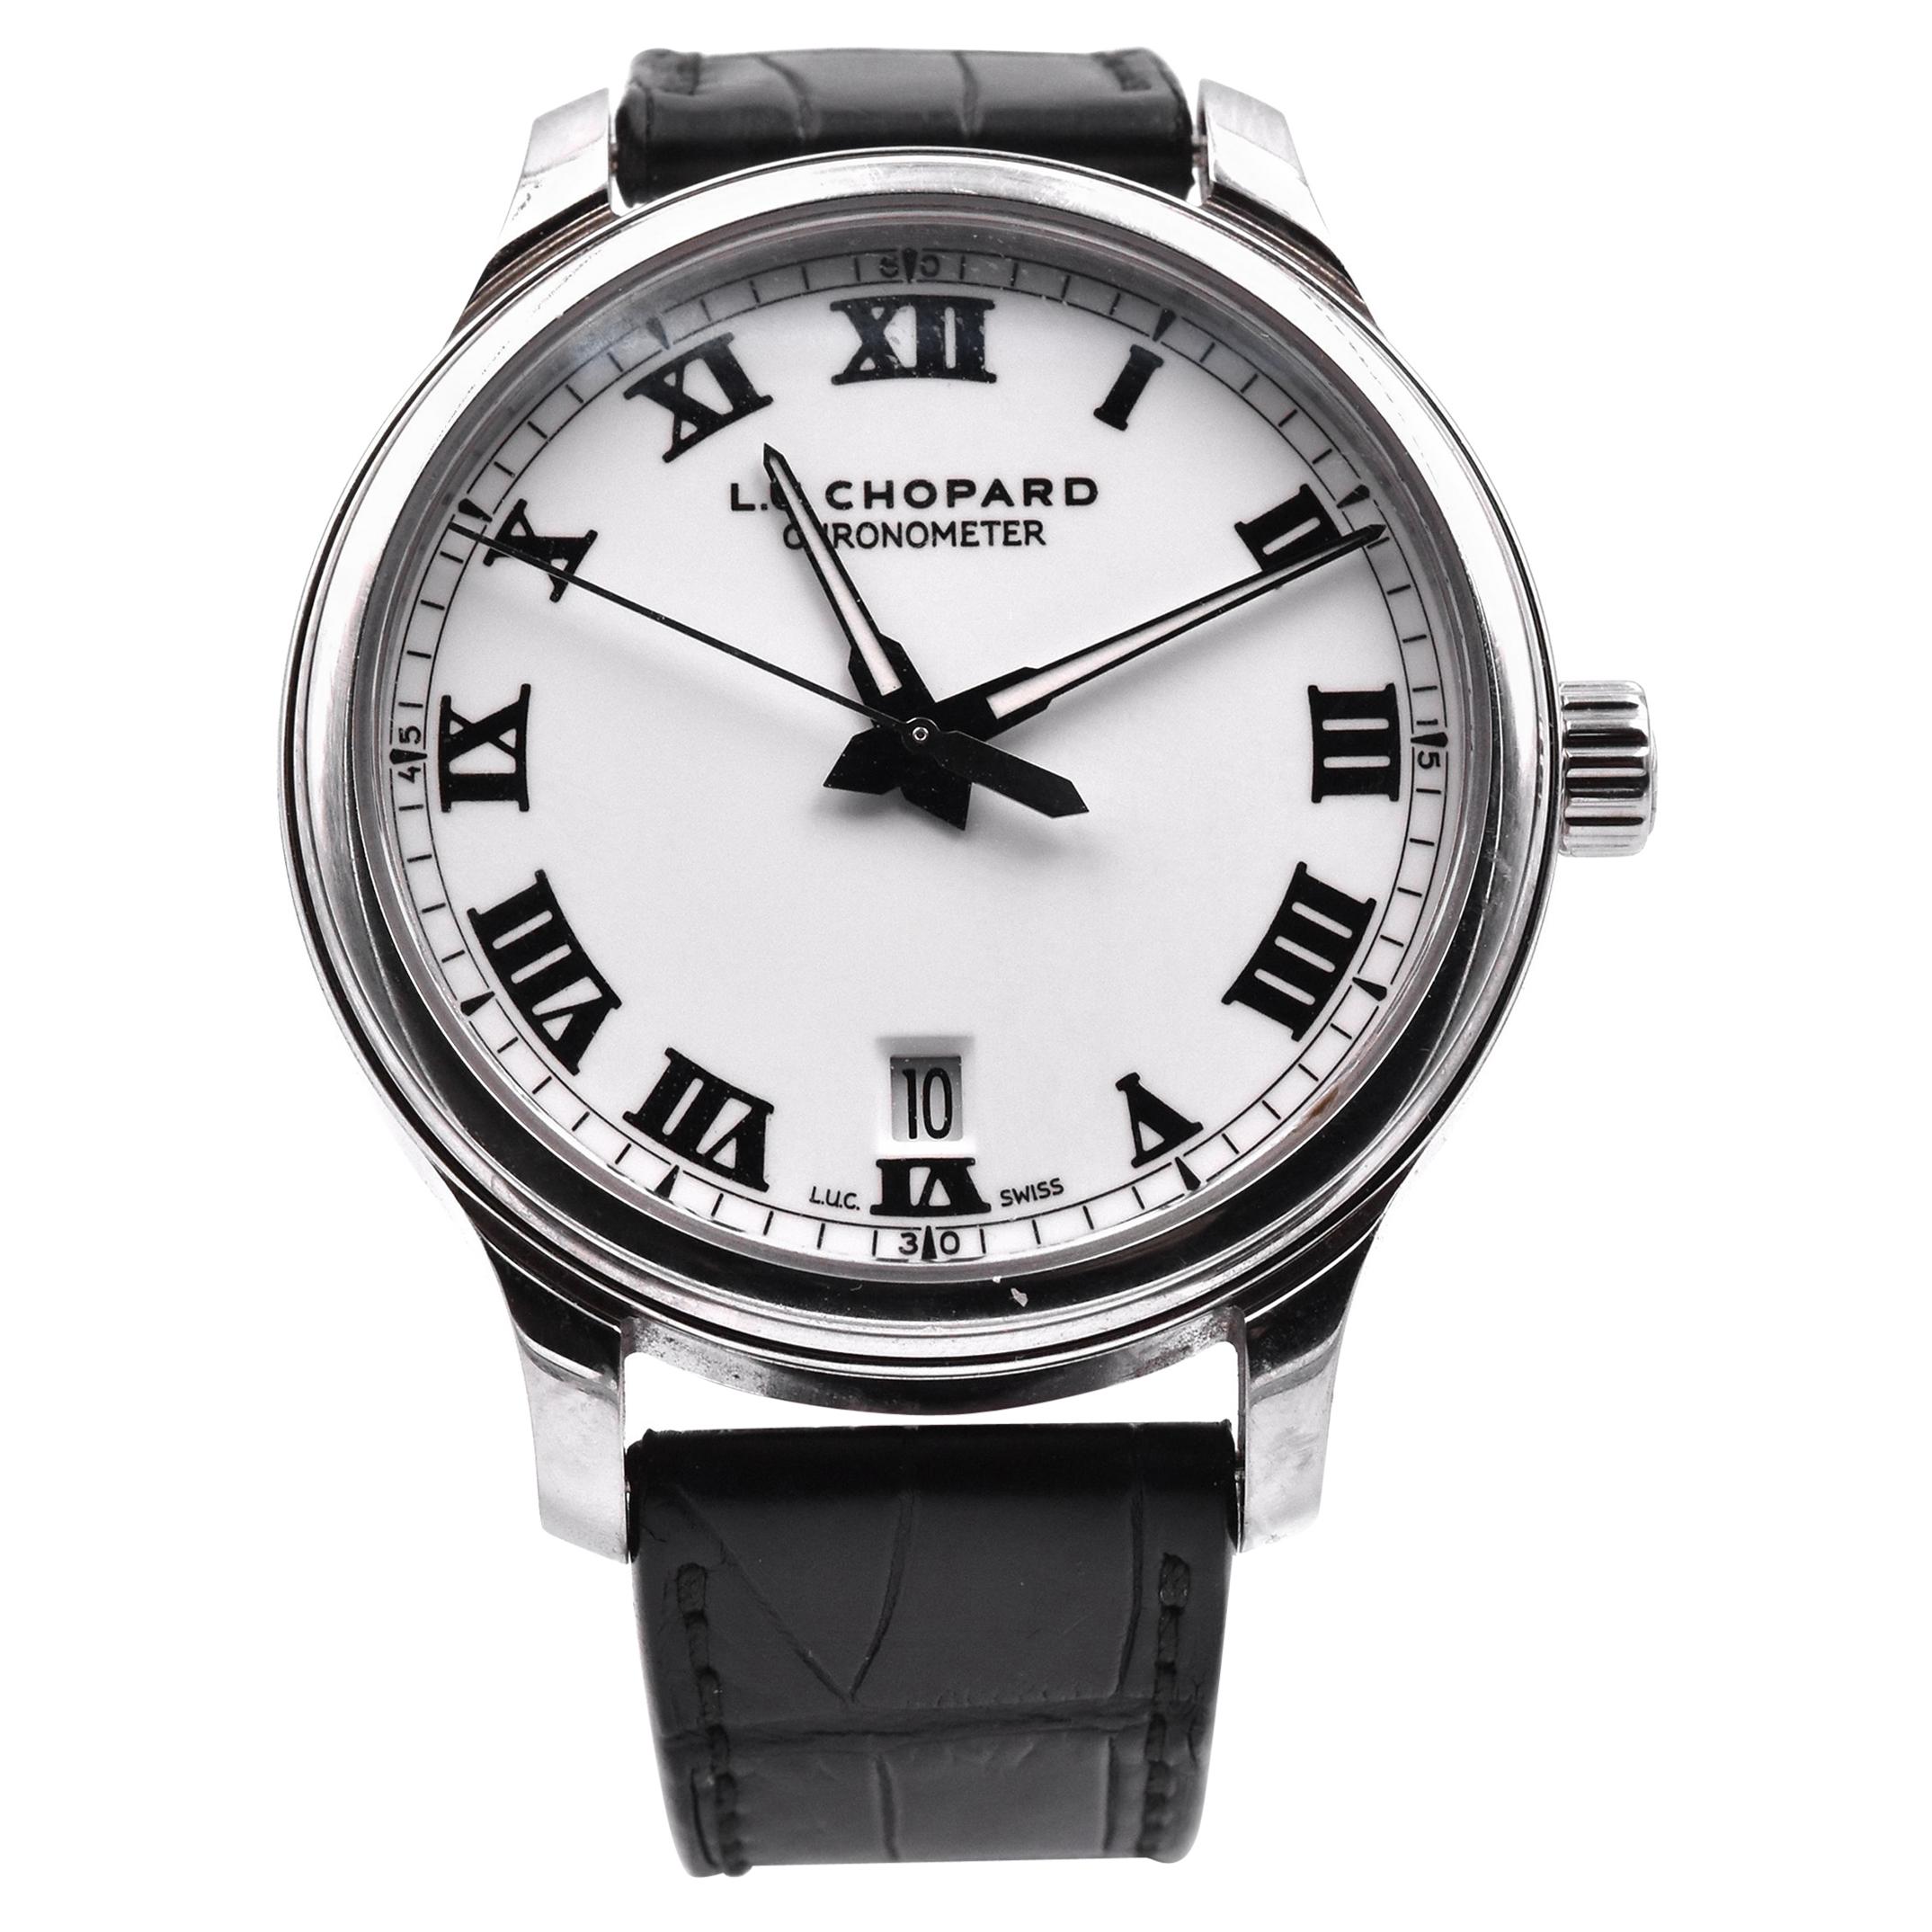 Chopard LUC 1937 Chronometer Watch Ref. 8544